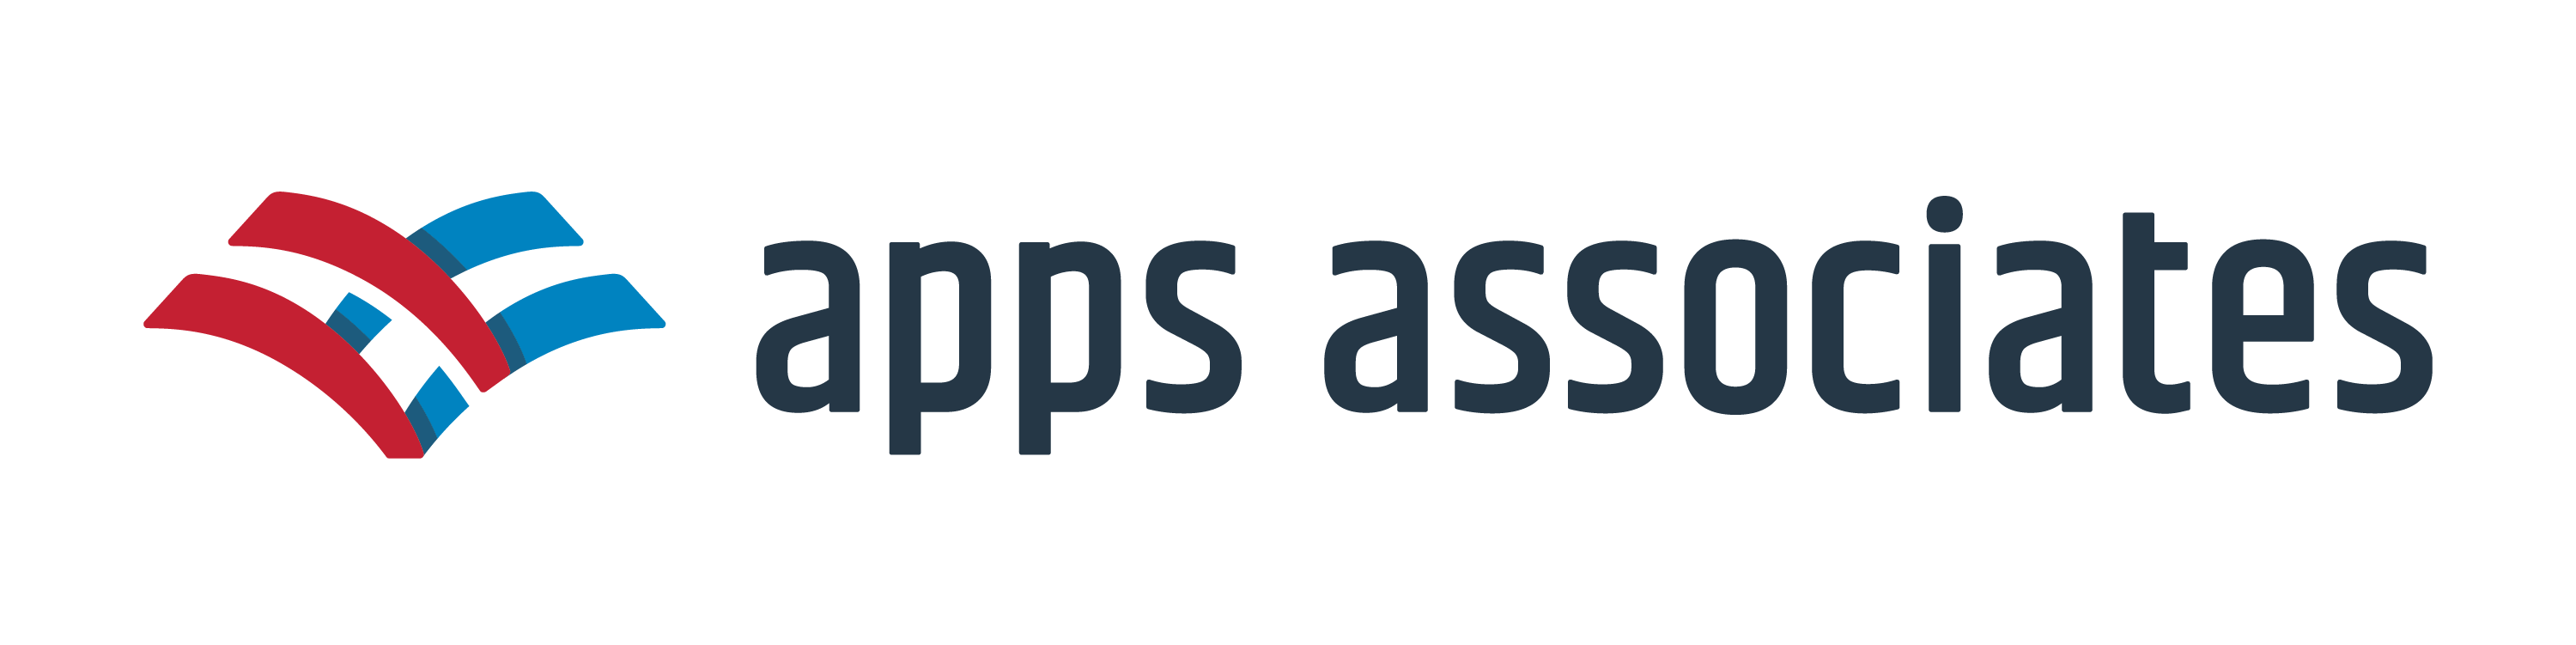 Apps Associates